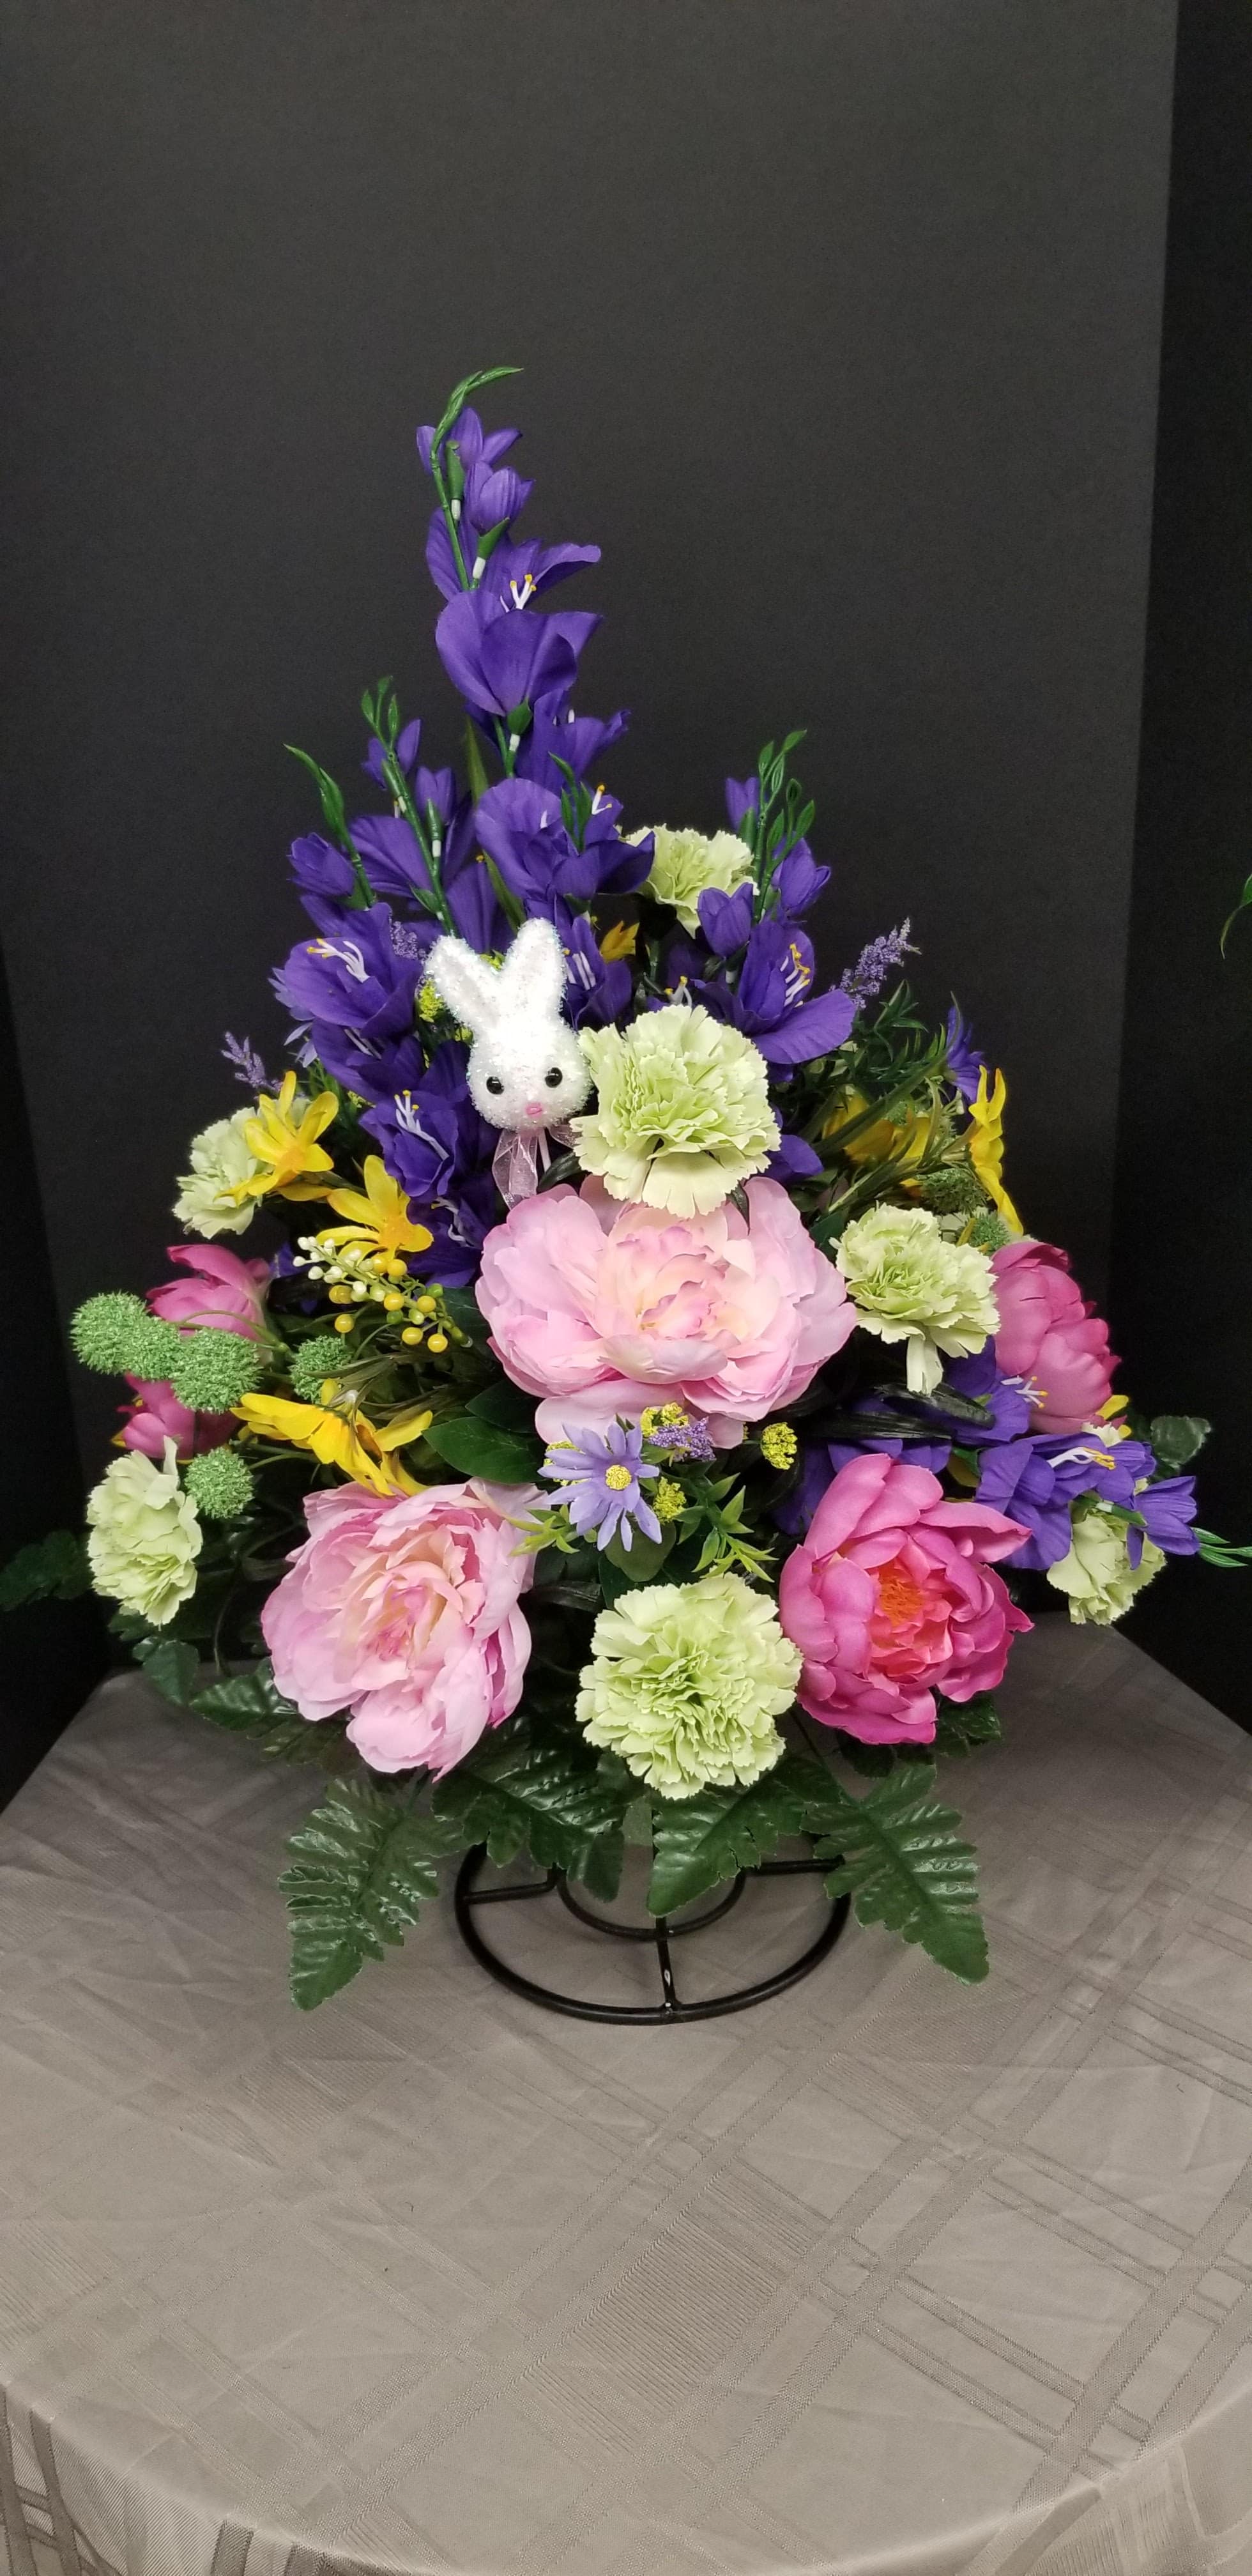 Renee's Flower Shop - Trinity, NC, US, flowers nearby